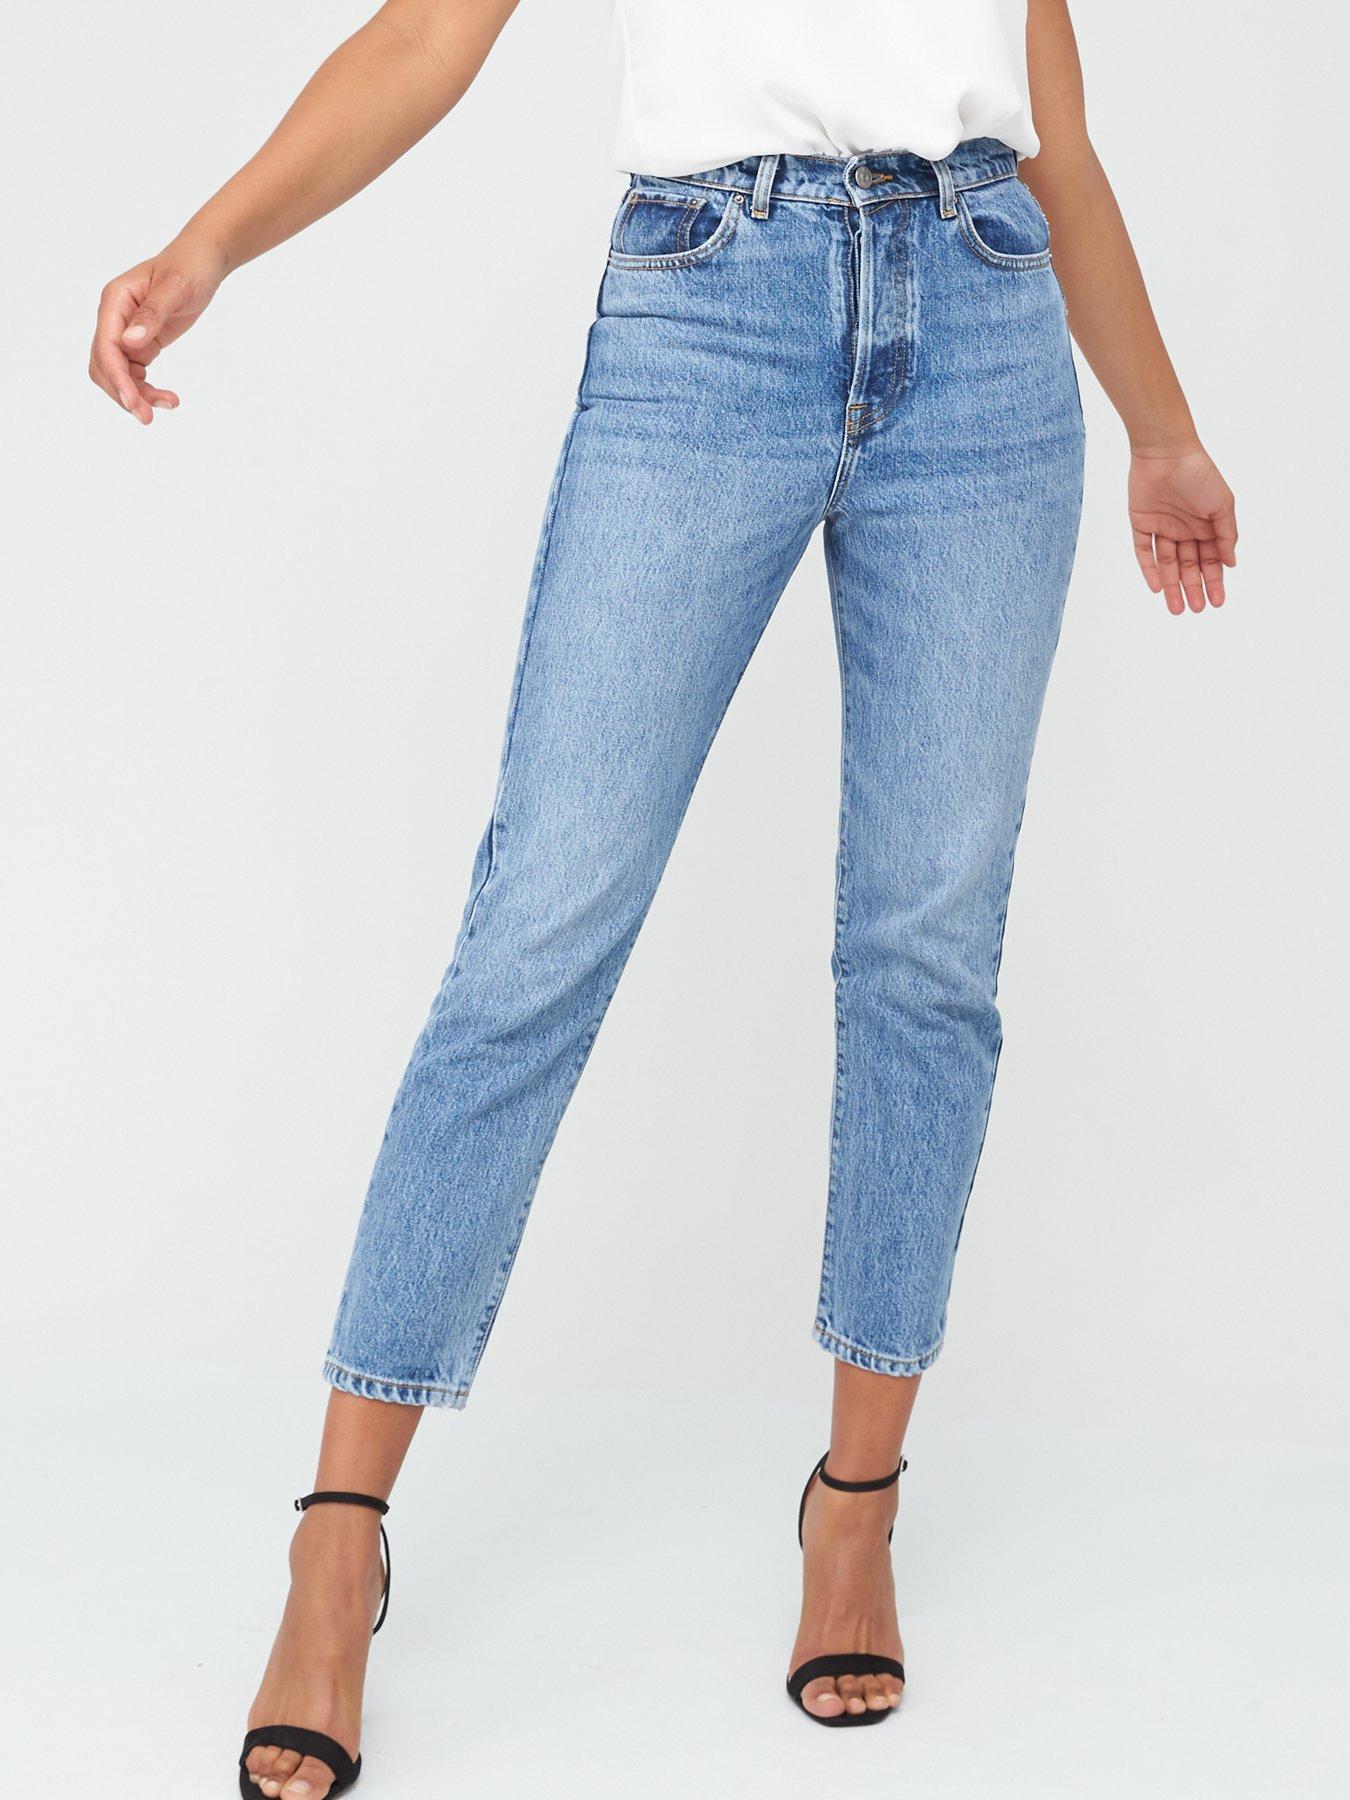 slim jeans womens uk